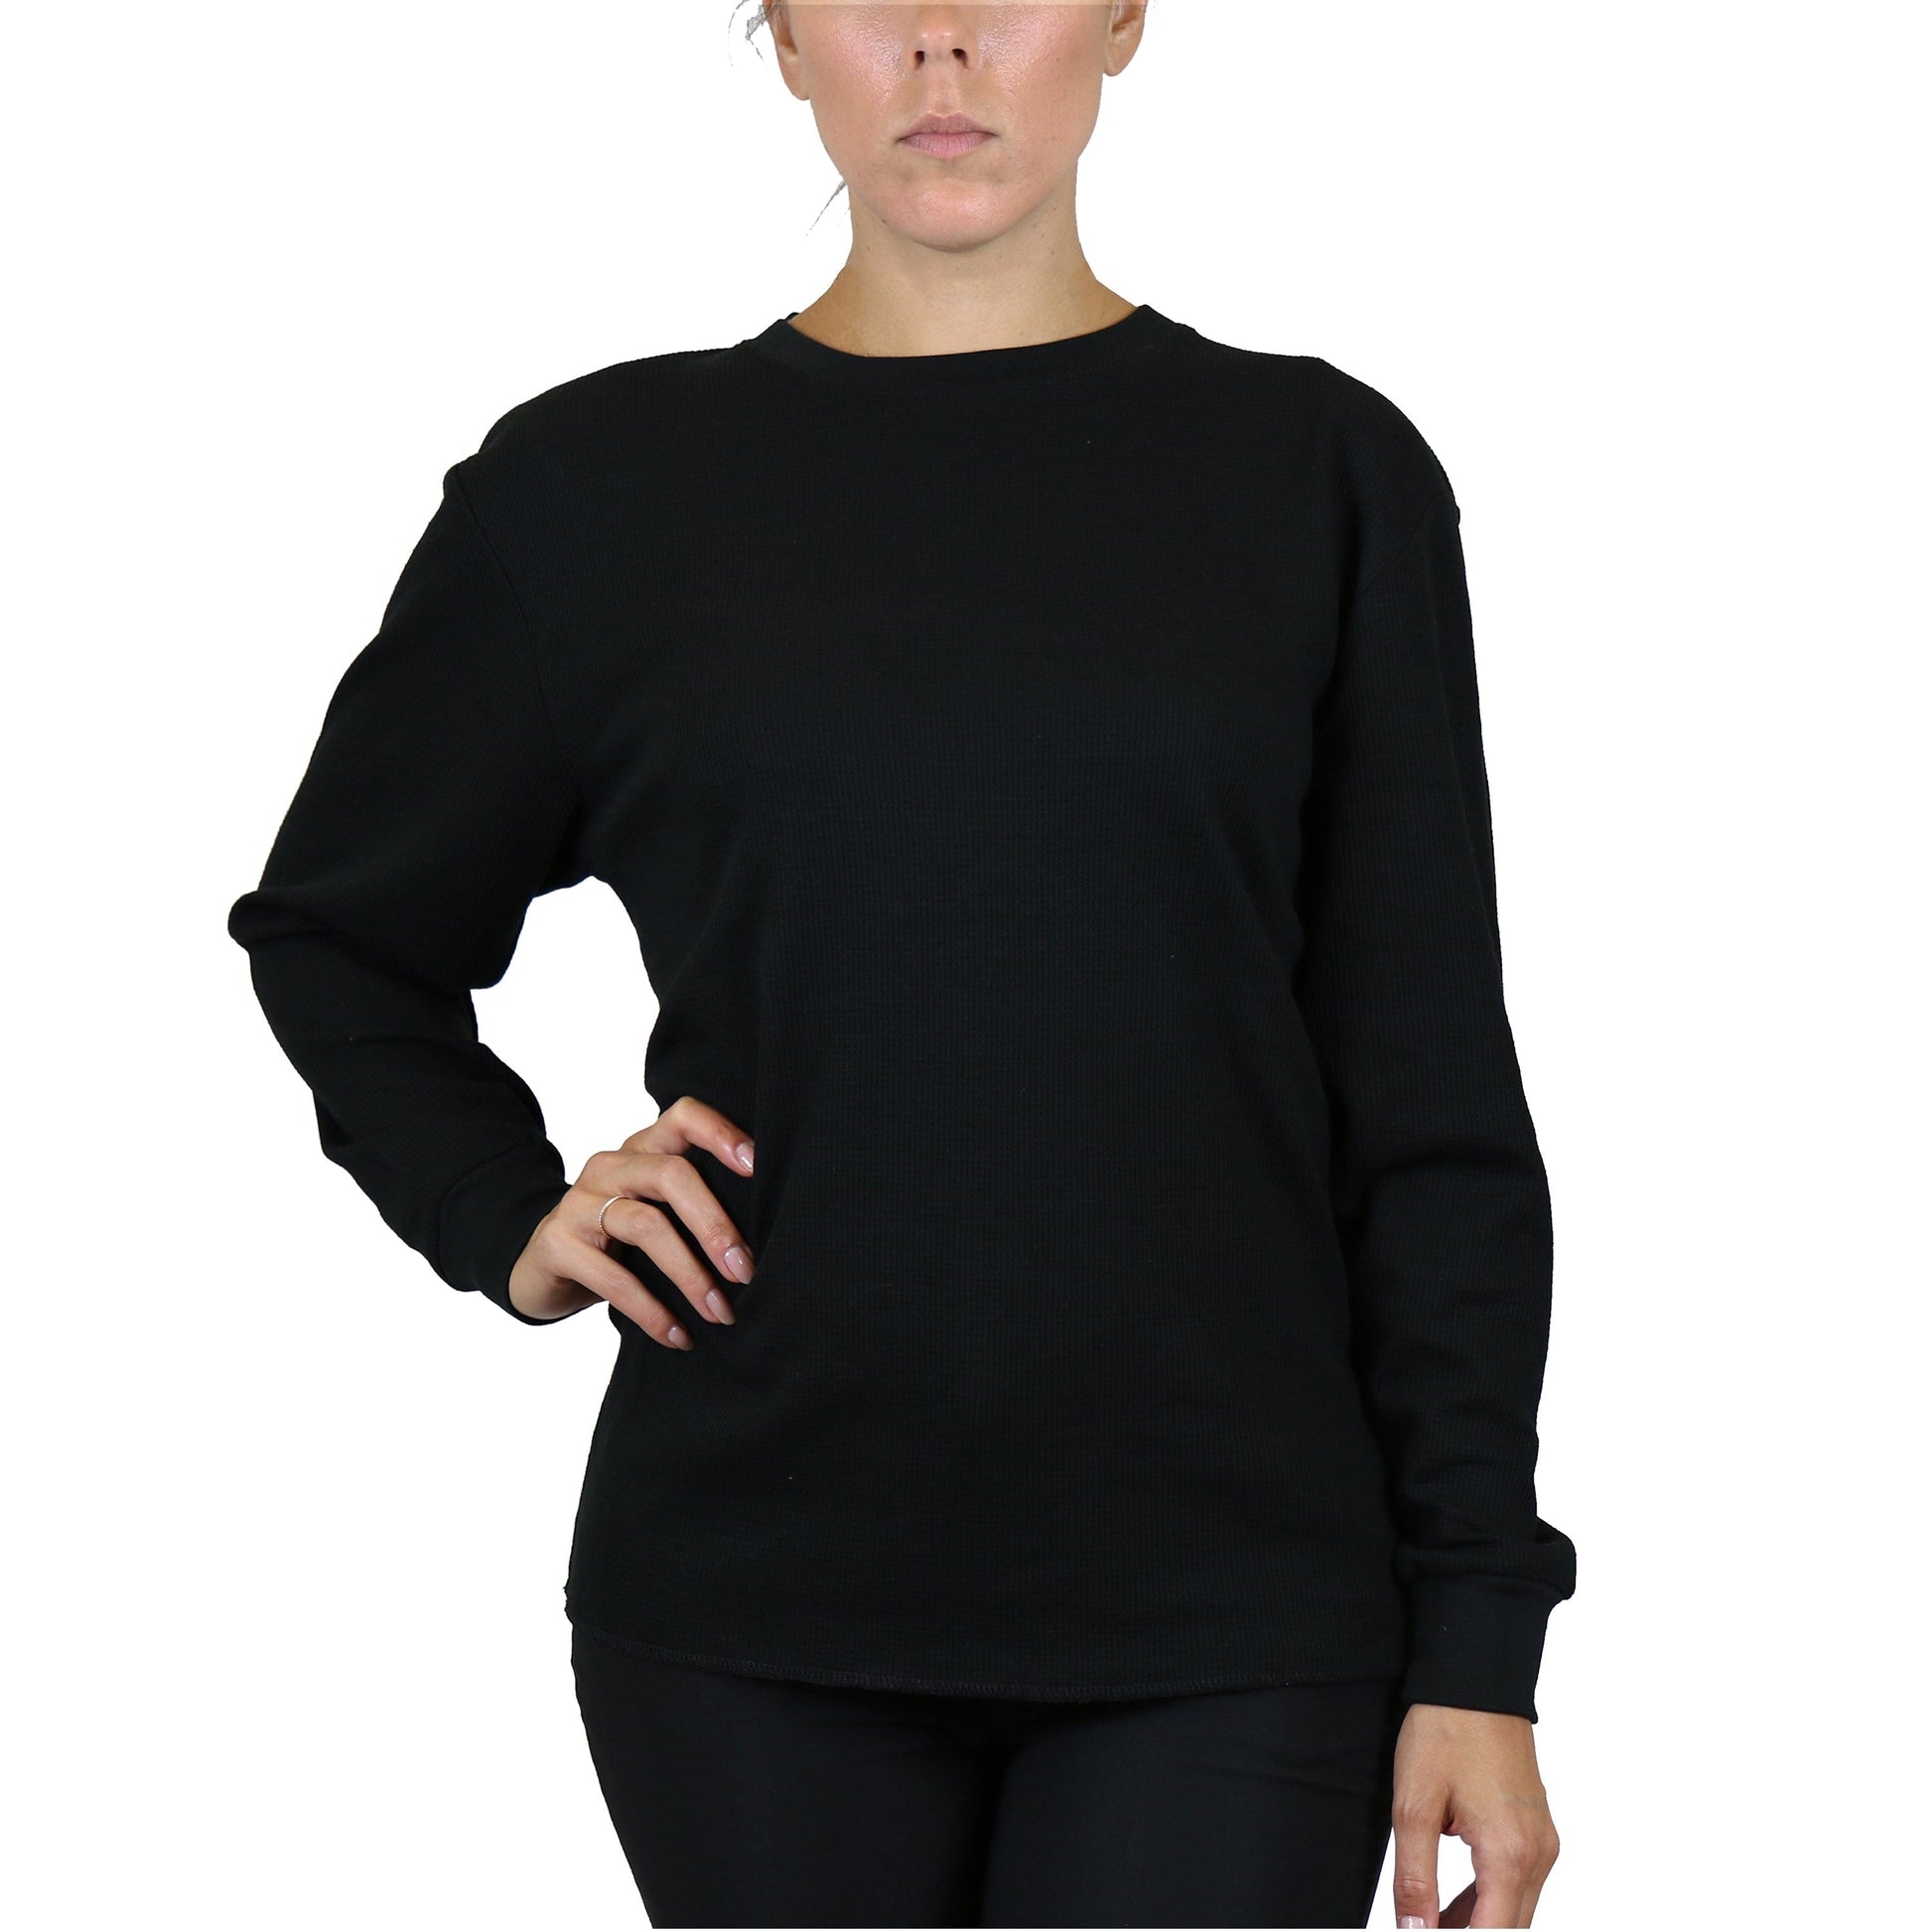 B91xZ Thermal Shirts for Women Women's Style Top Hidden Belly Button Long  Version Top Summer Short Sleeve T Shirt Cute Flowing Womens Plus Size Tops